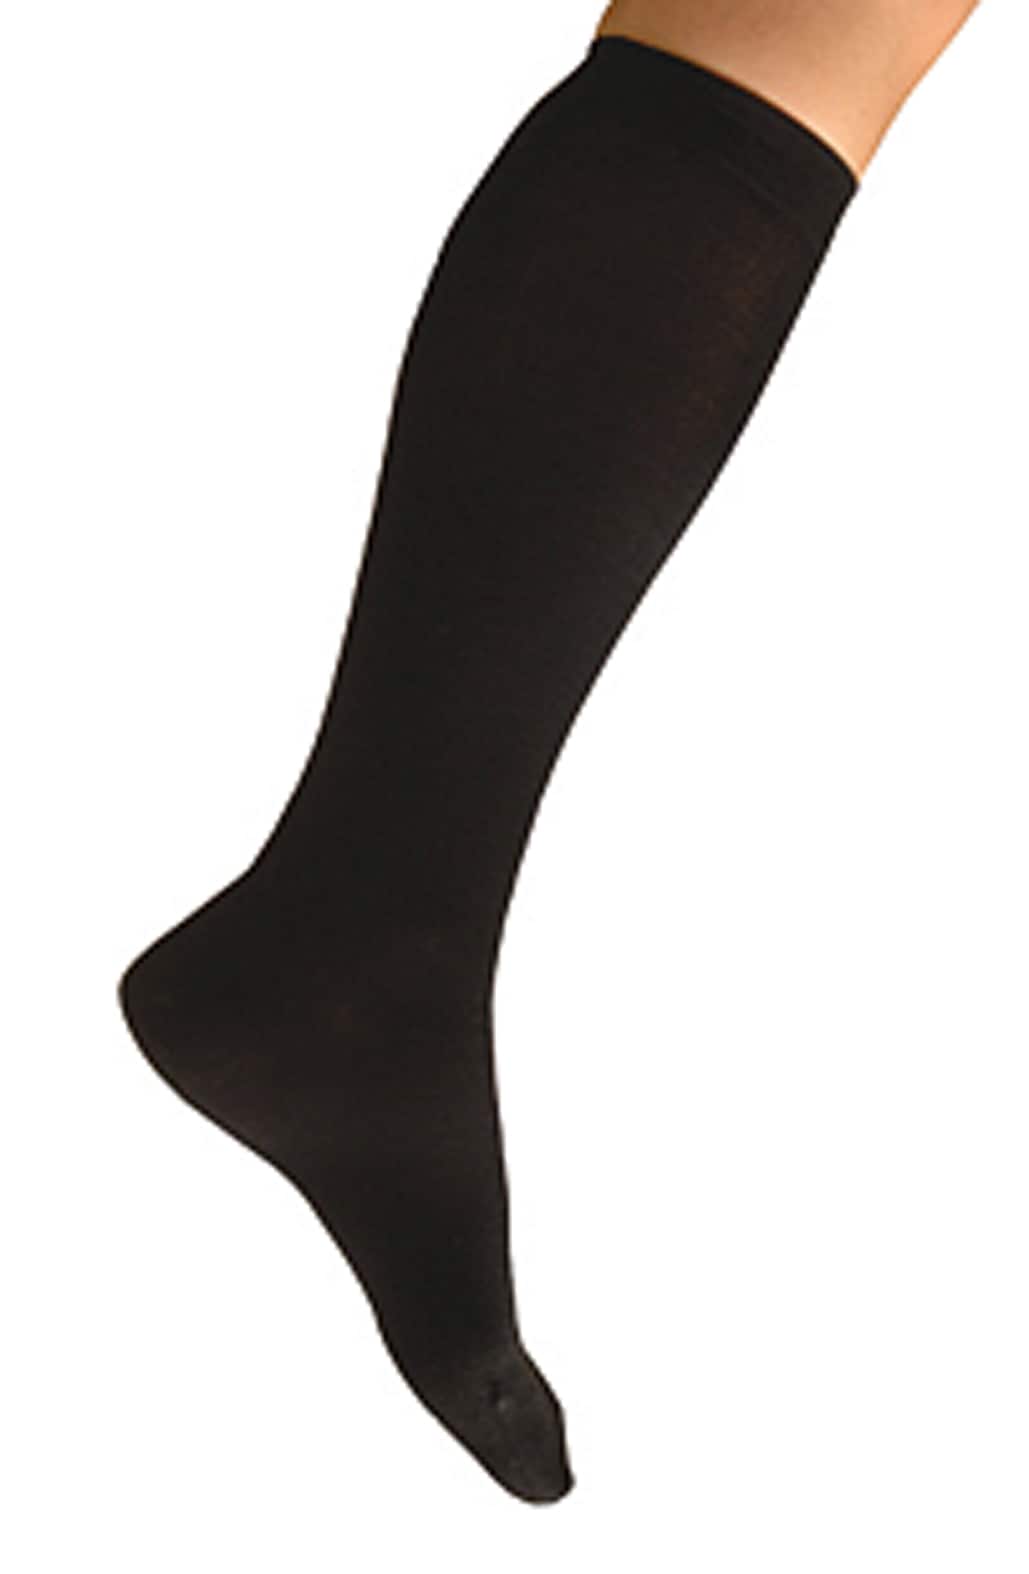 Silk Knee High Socks, Black